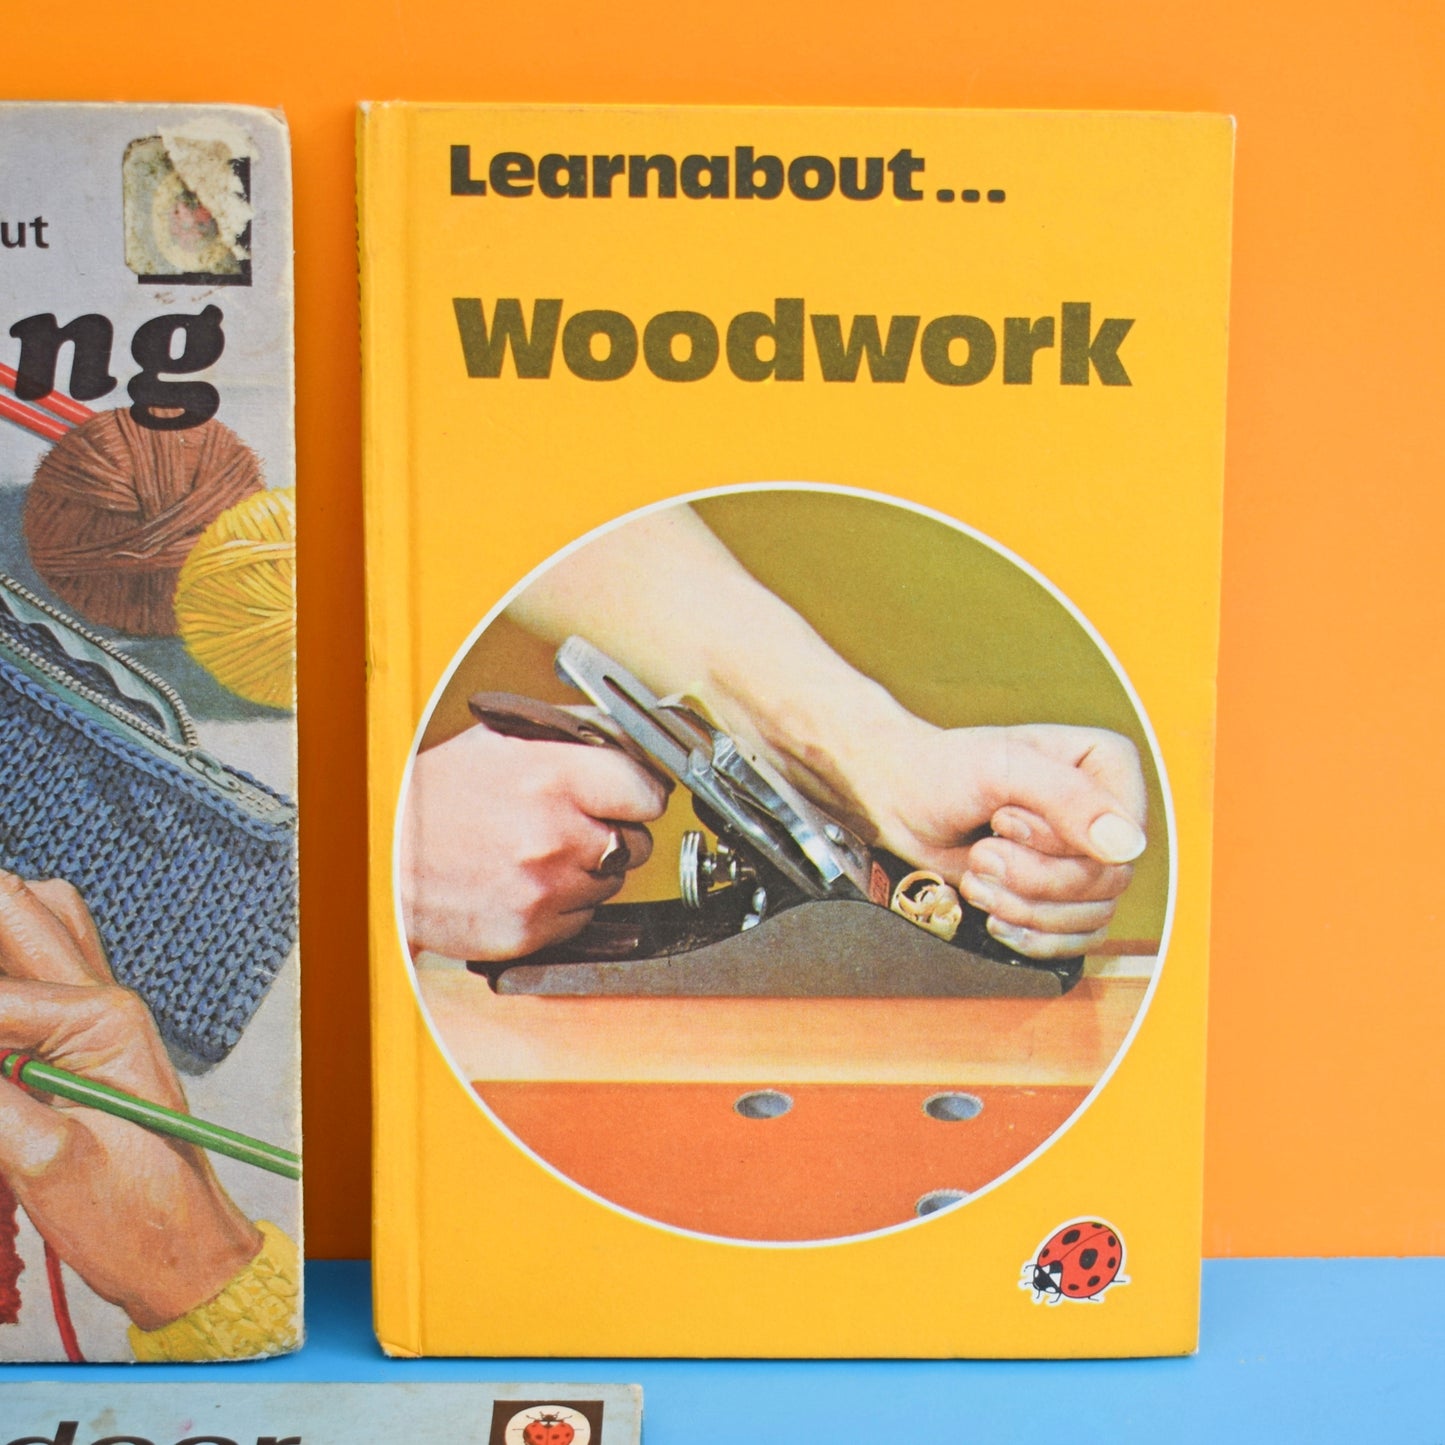 Vintage Ladybird Books - Indoor Gardening , Knitting, Woodwork